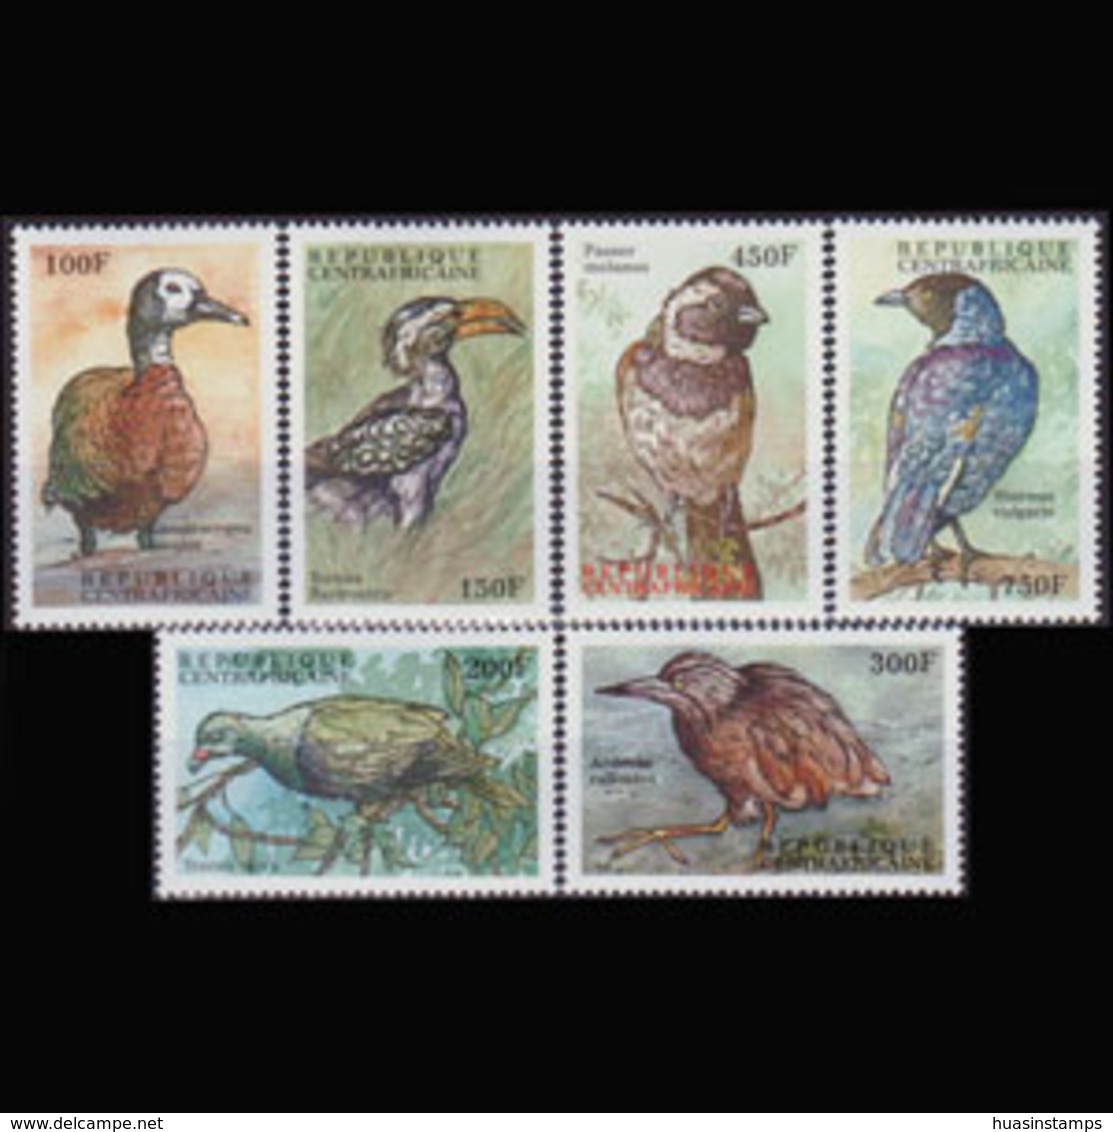 CENTRAL AFRICA 2000 - Scott# 1315-20 Birds Set Of 6 MNH - Repubblica Centroafricana